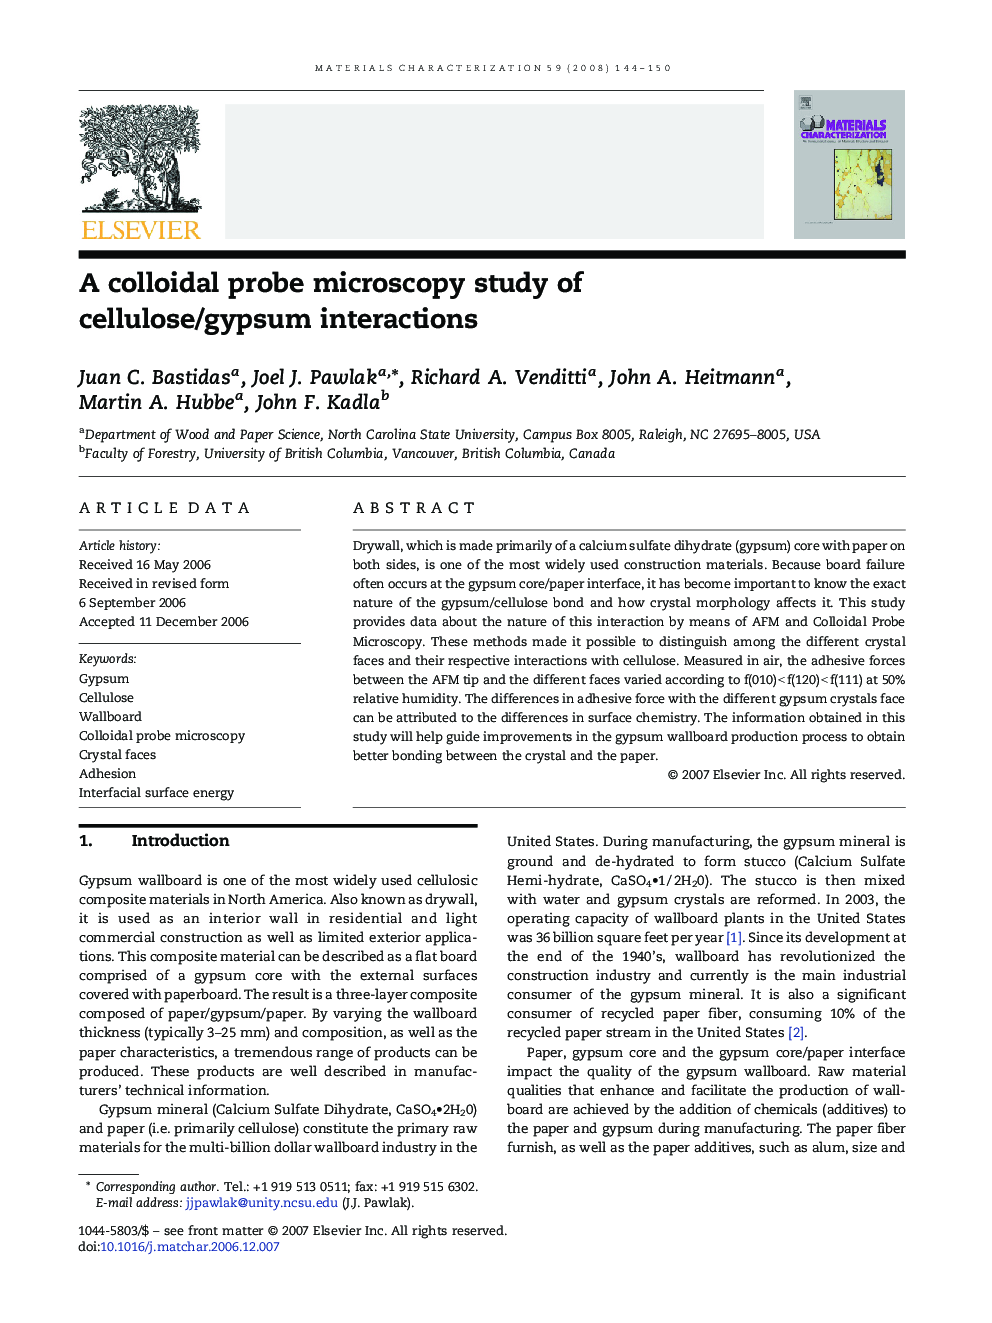 A colloidal probe microscopy study of cellulose/gypsum interactions